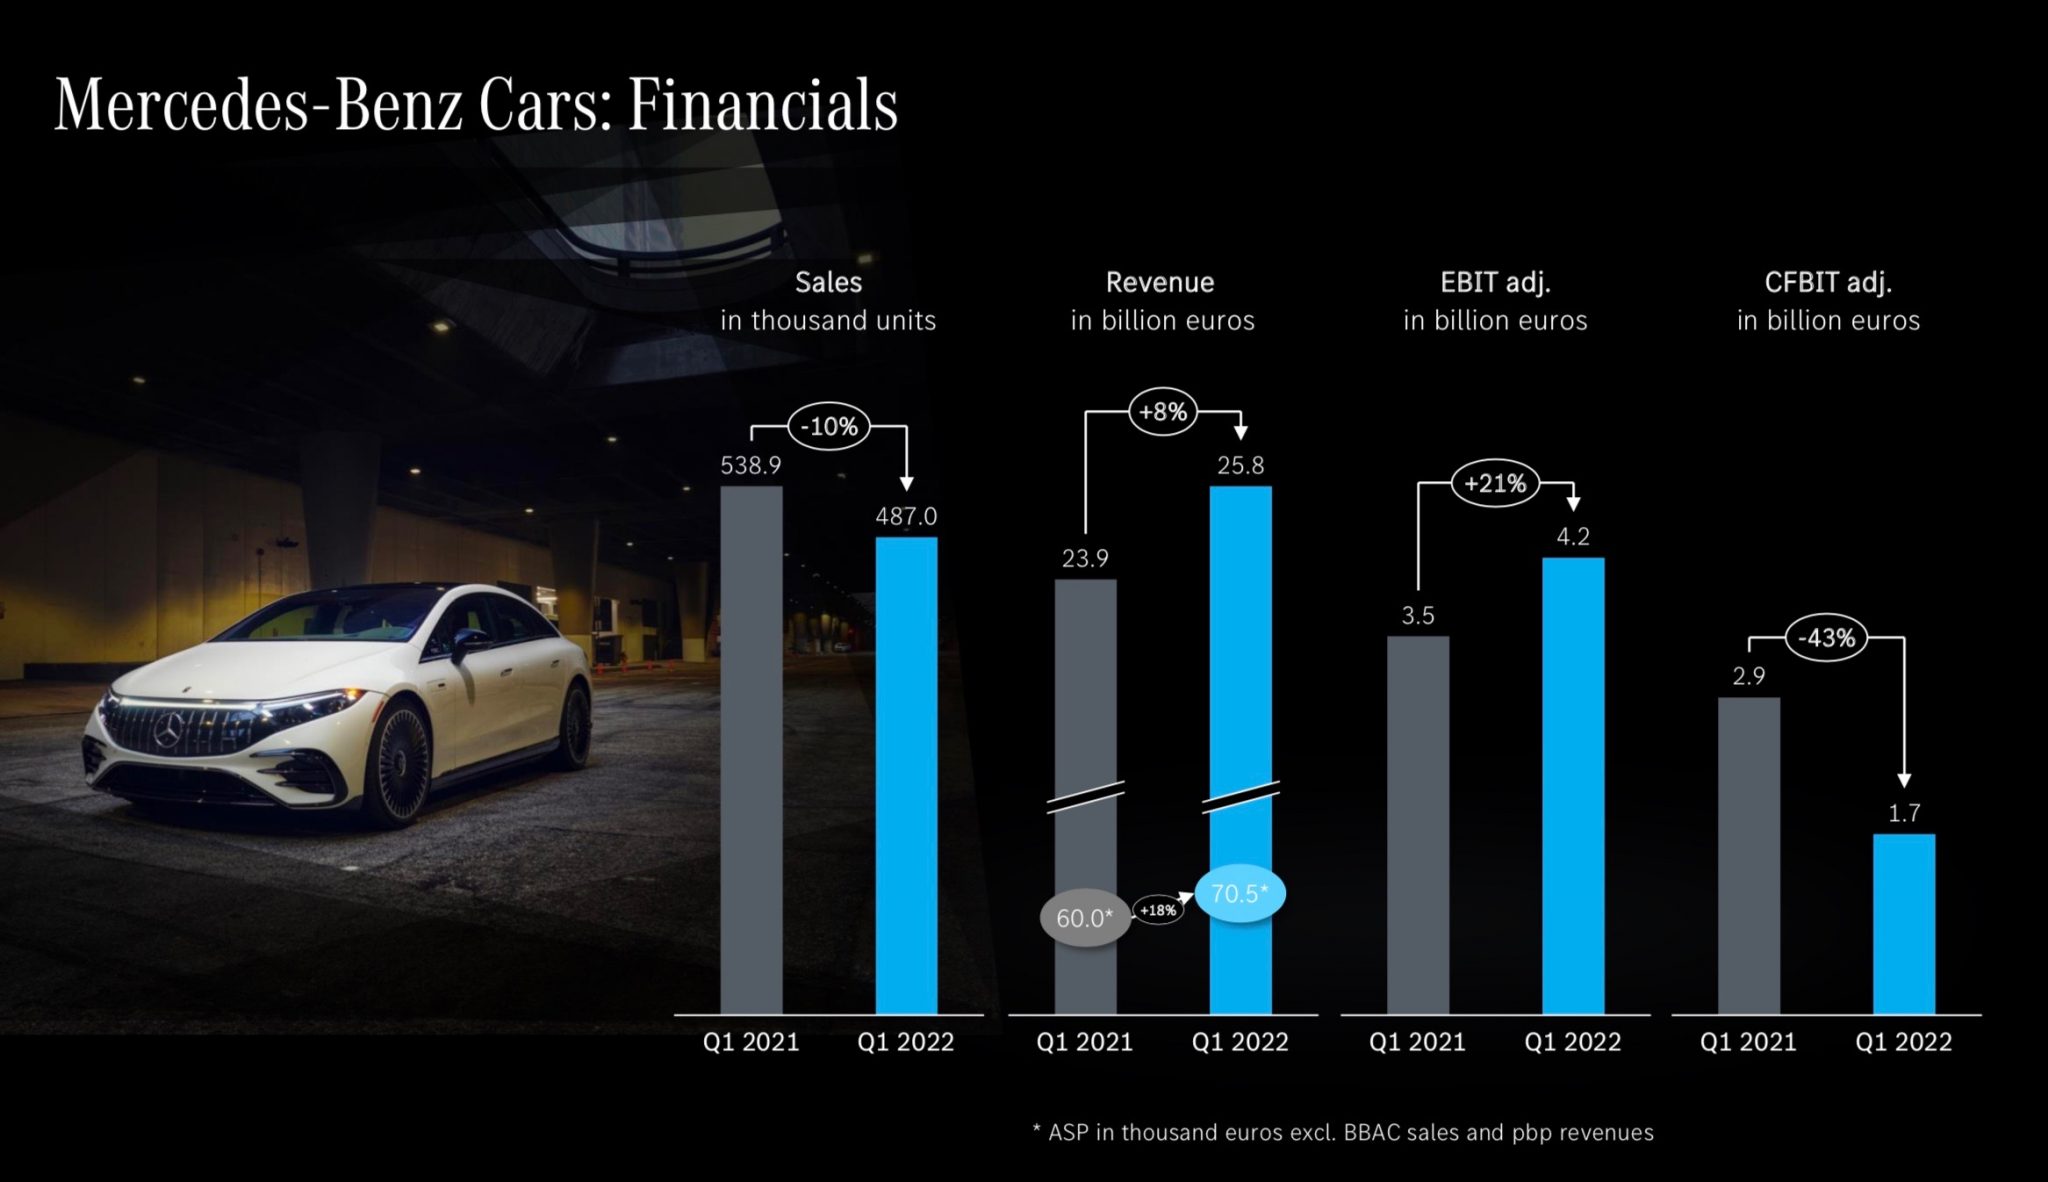 MercedesBenz global sales down 10 in Q1 2022, revenue up 8